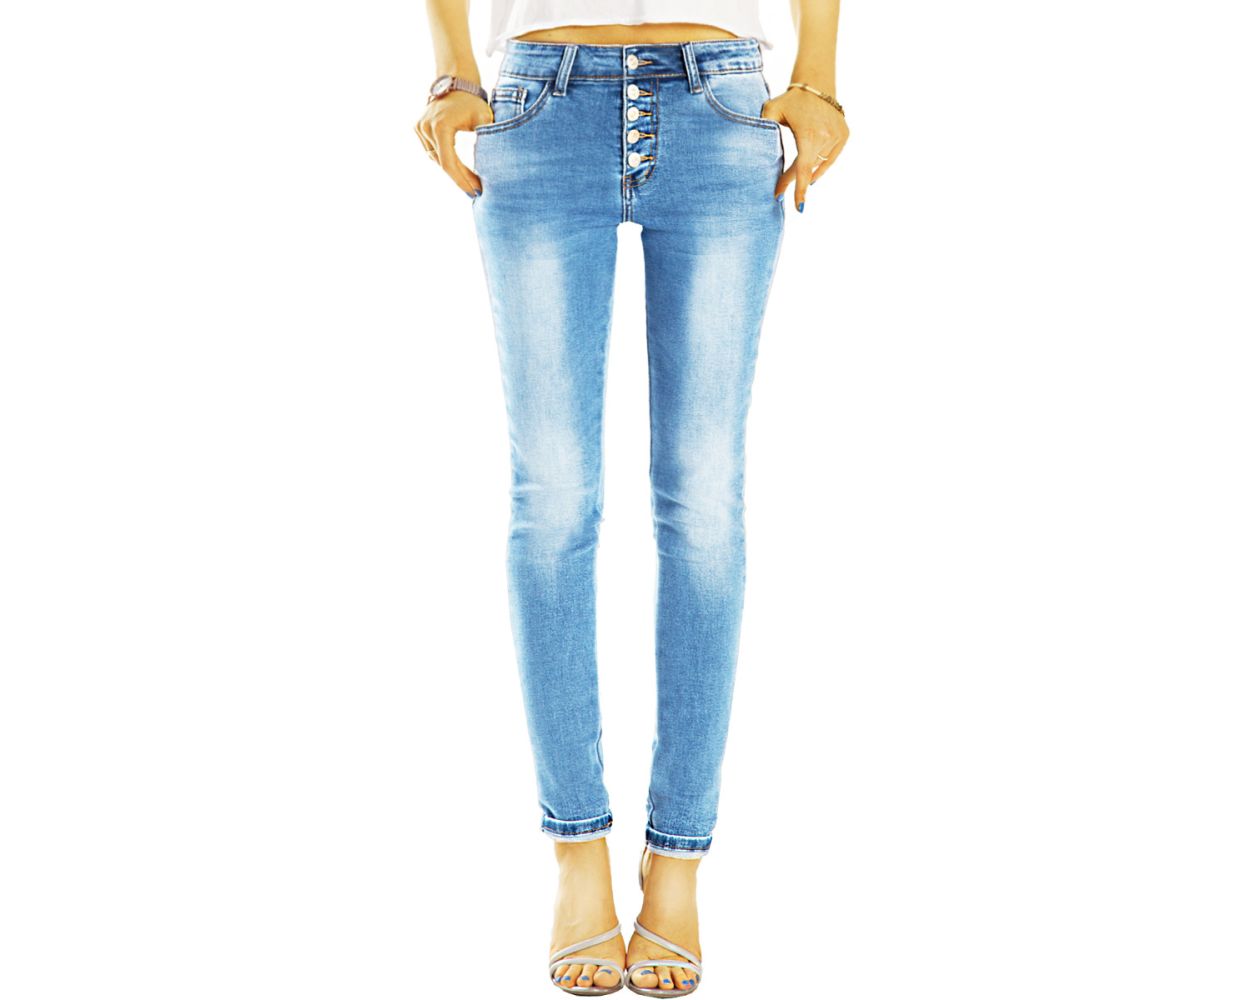 Jeans - Damen skinny mit medium j15m BE tappered - - STYLED stretch Knopfleiste bequeme hose - waist